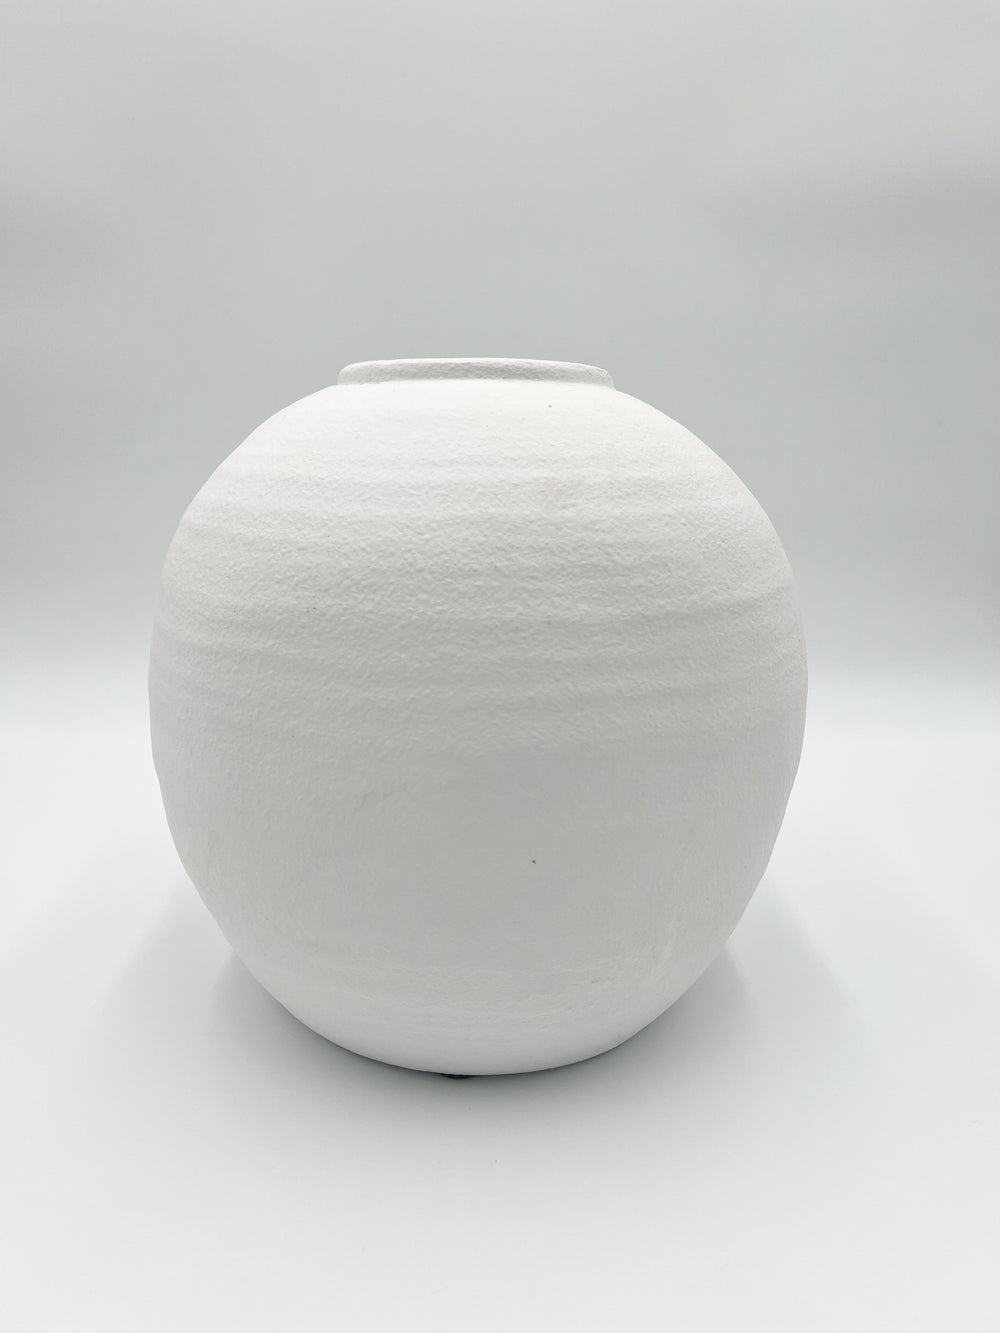 Gia White Cement Vase - Two sizes available